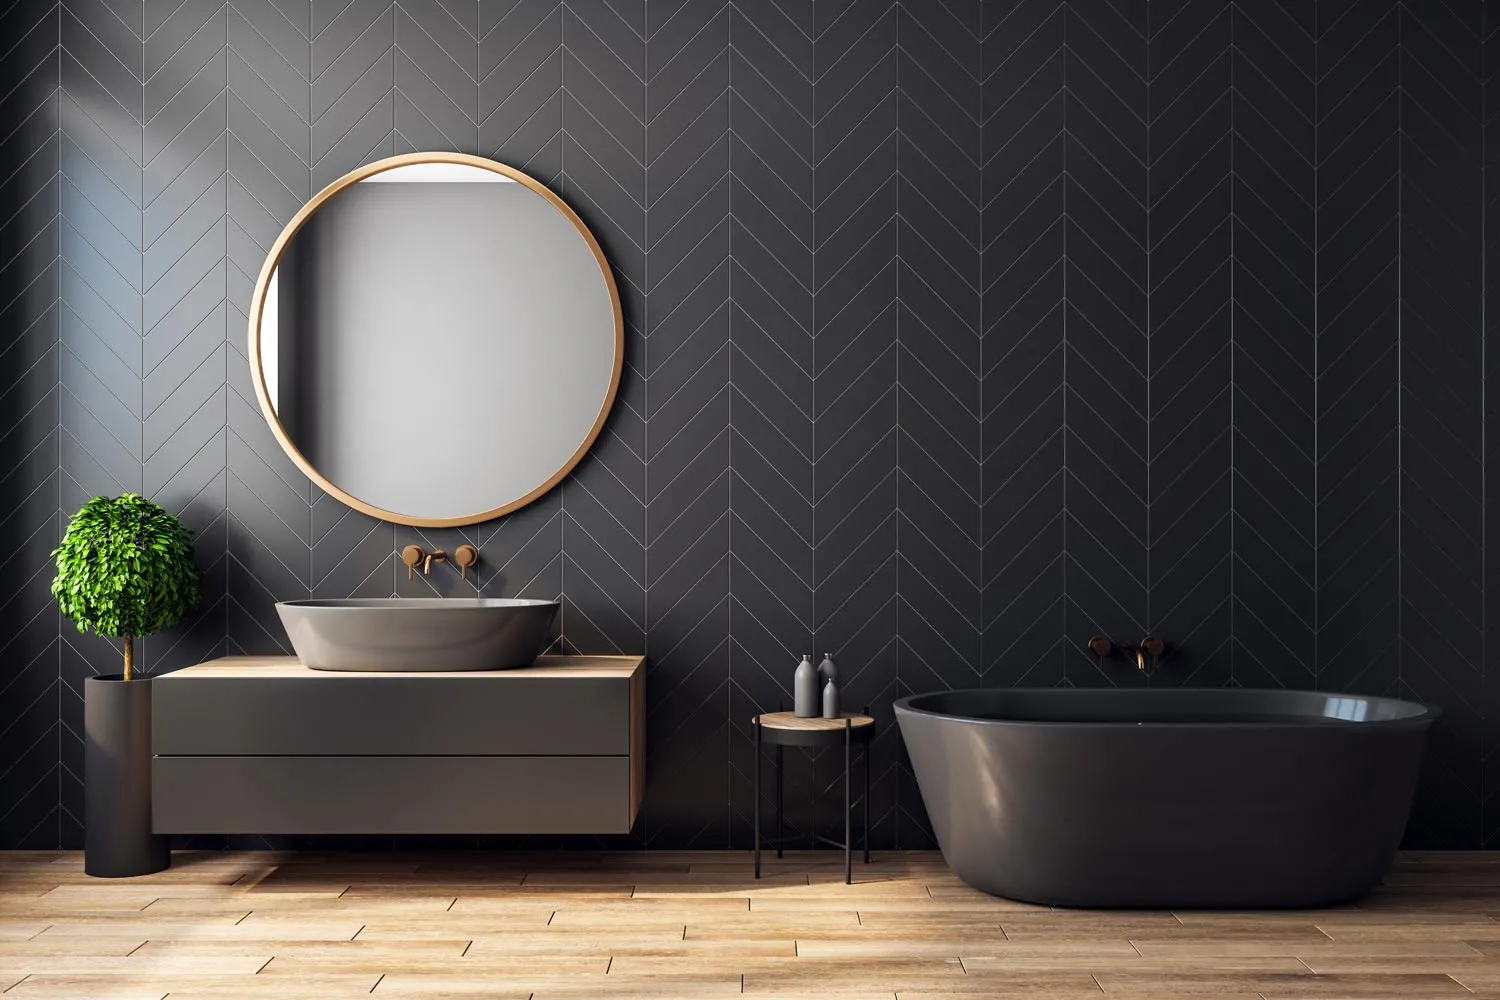 A dark-themed designer bathroom flooring tiles & tiling design with a vanity table and a neutral tile floor